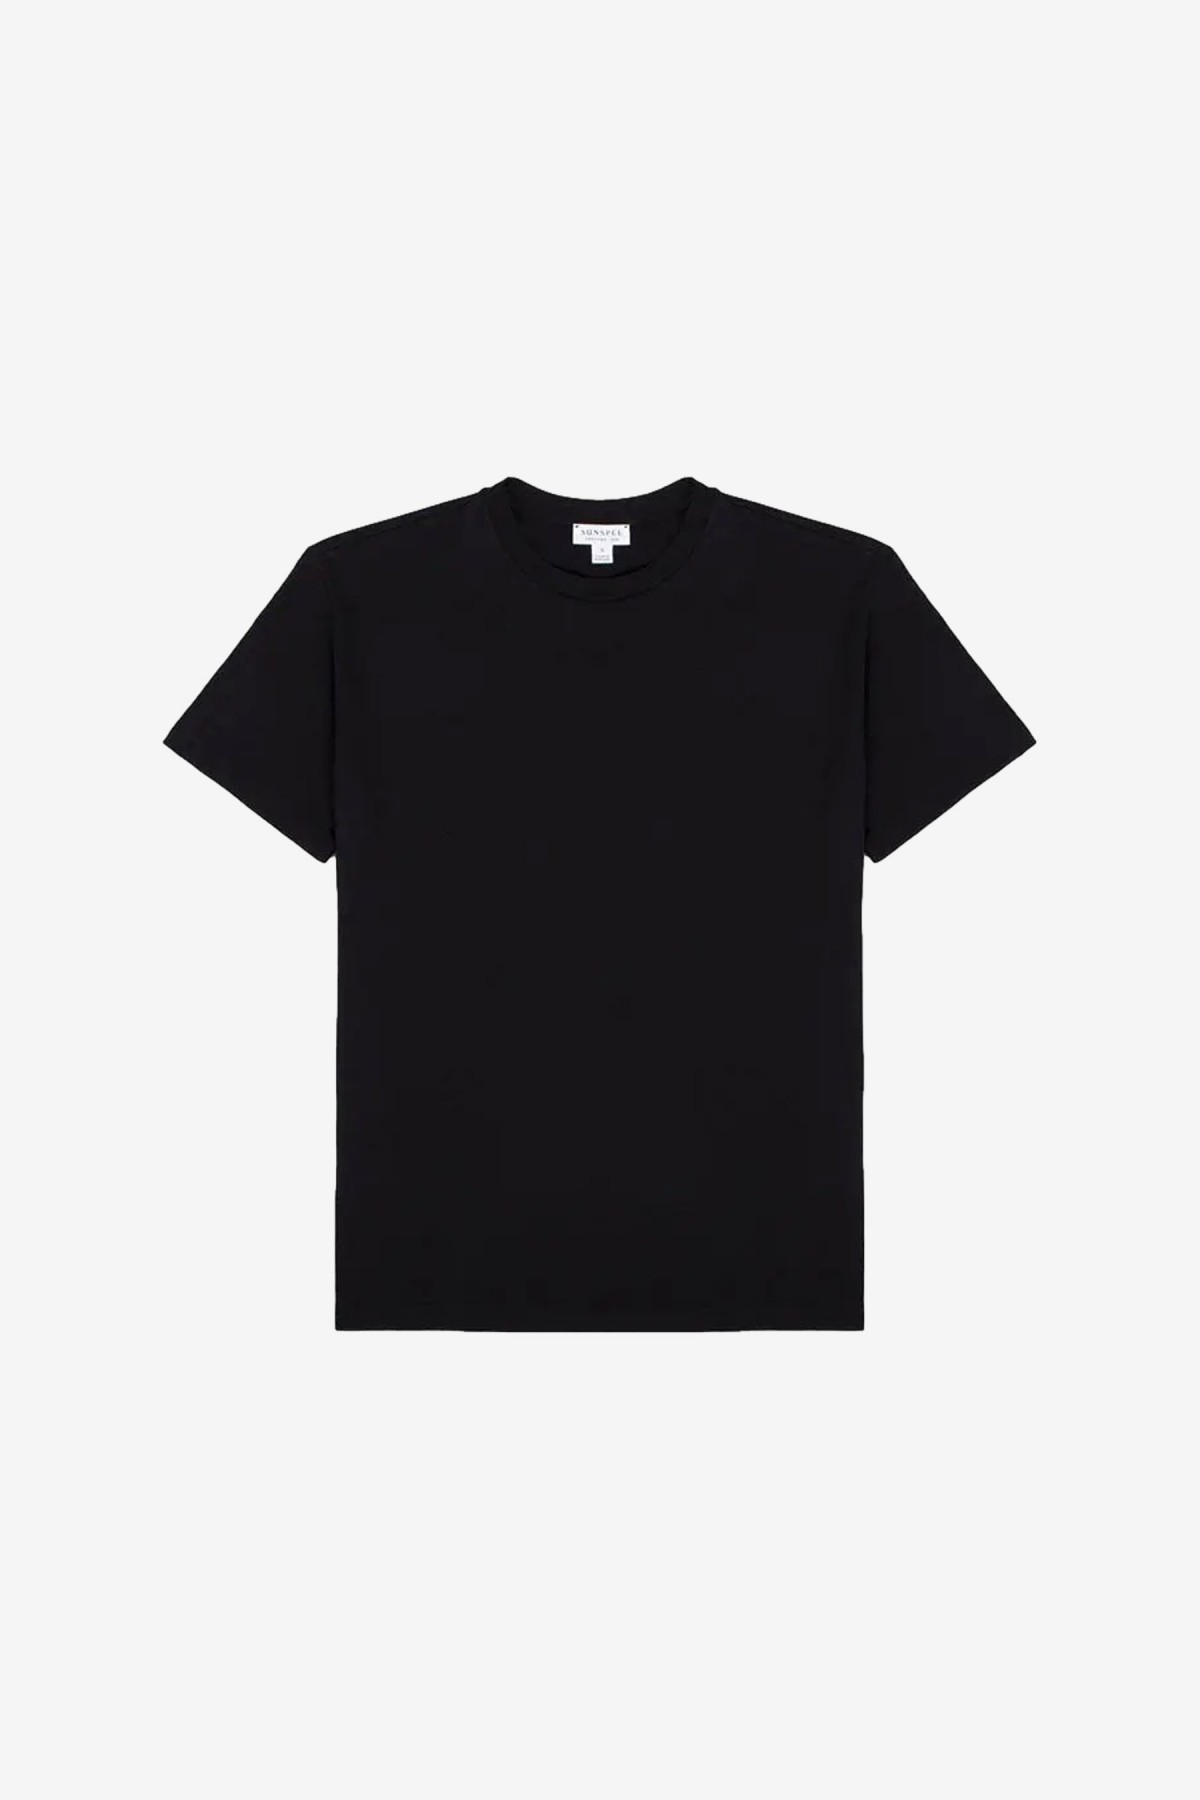 Sunspel Boy-Fit Crew Neck T Shirt in Black